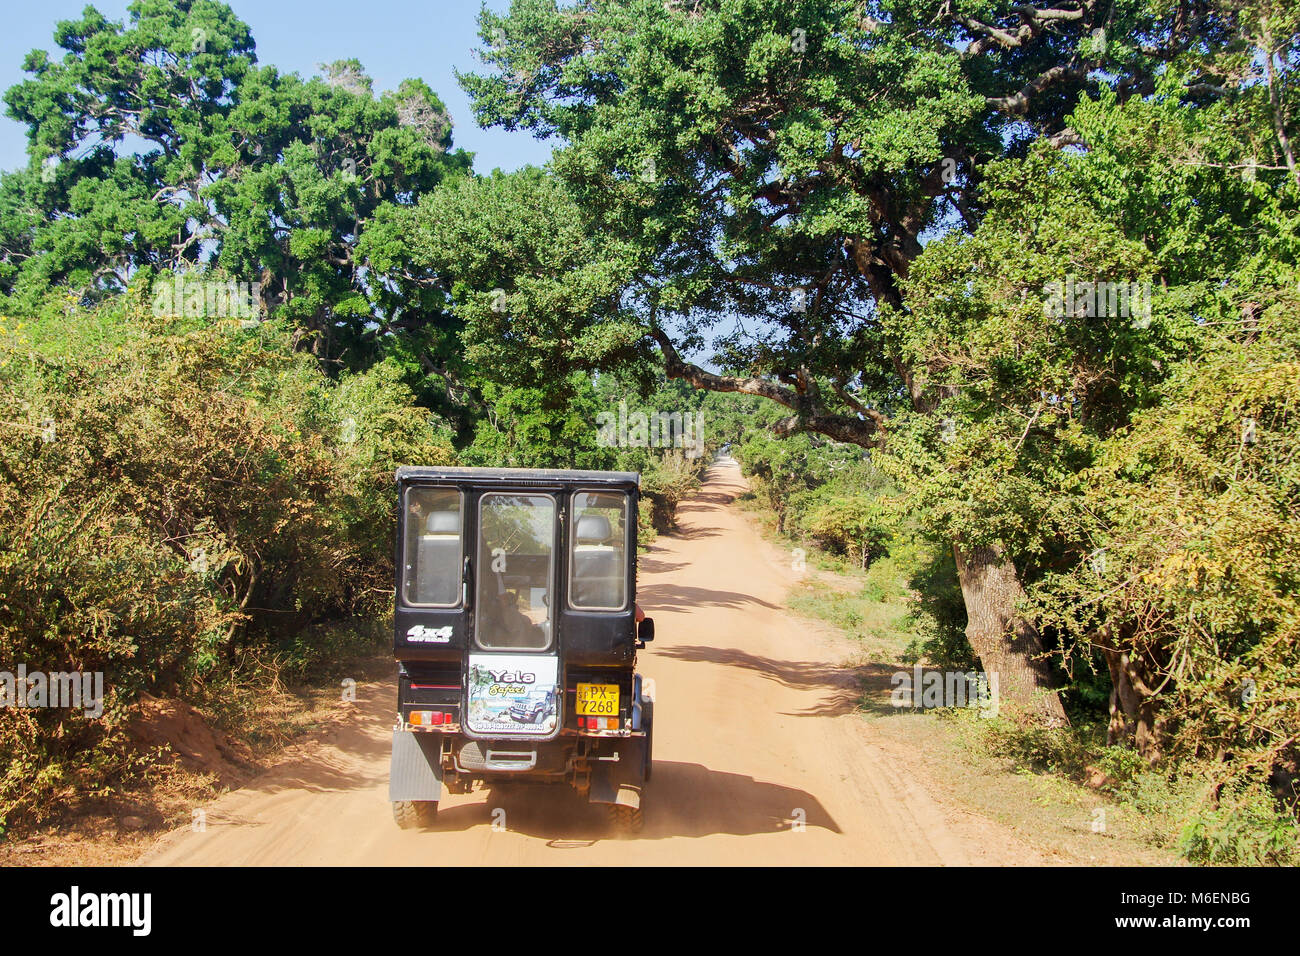 A safari jeep on a dirt road in the Yala National Park in Sri Lanka Stock Photo